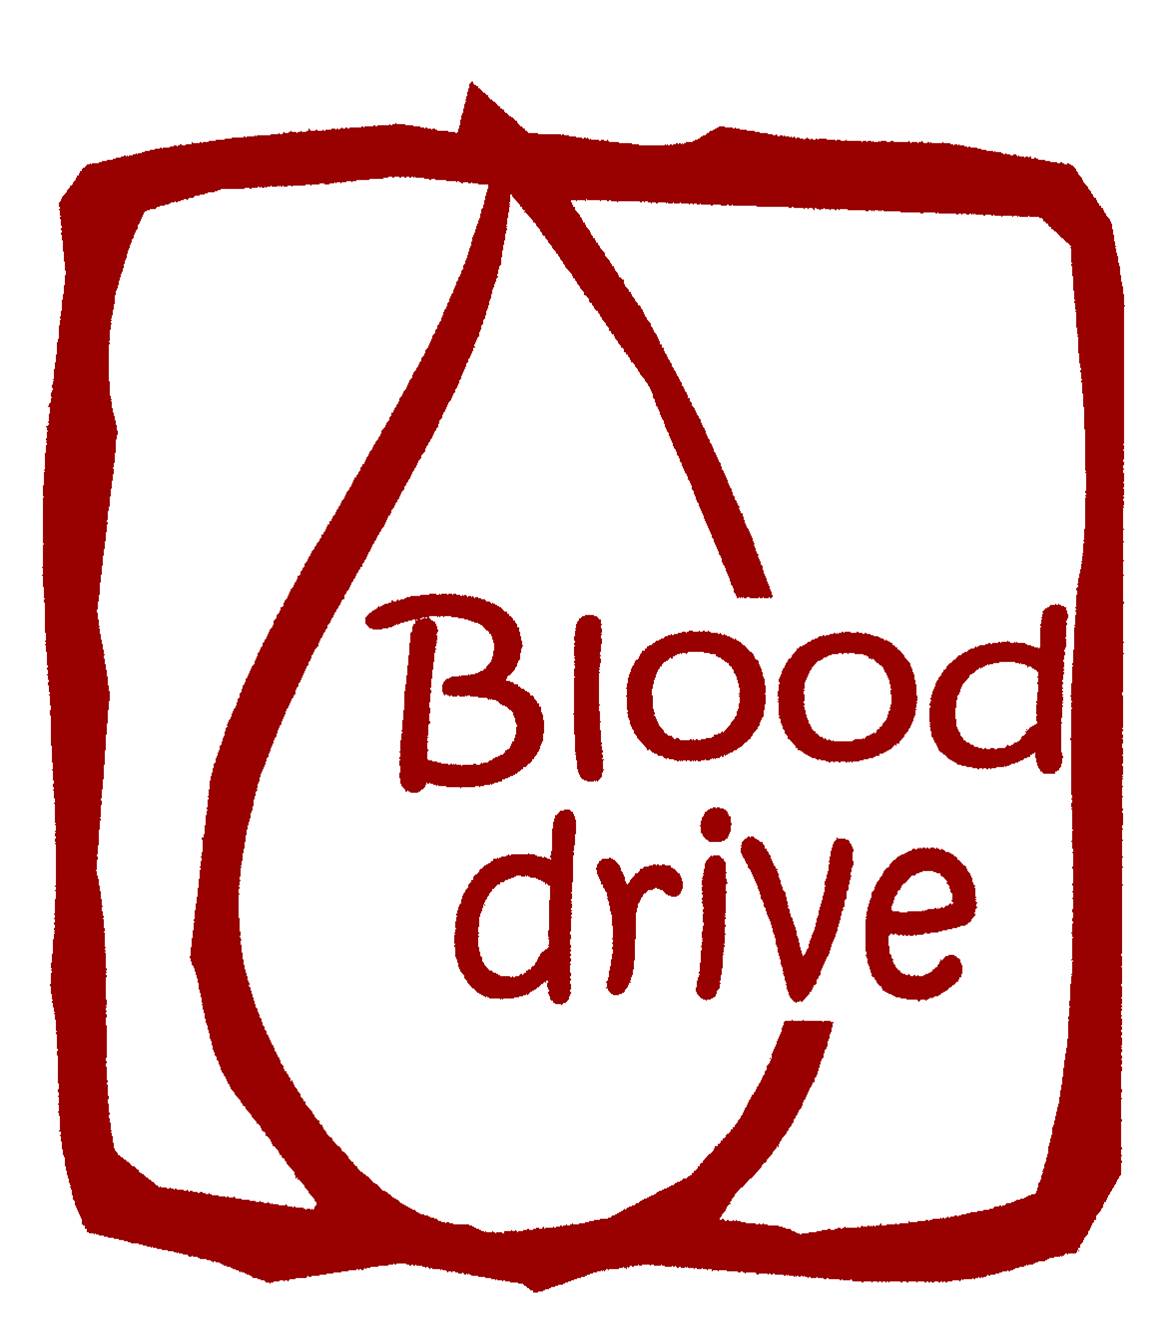 REMINDER – COMMUNITY BLOOD DRIVE | JustSayNews.com